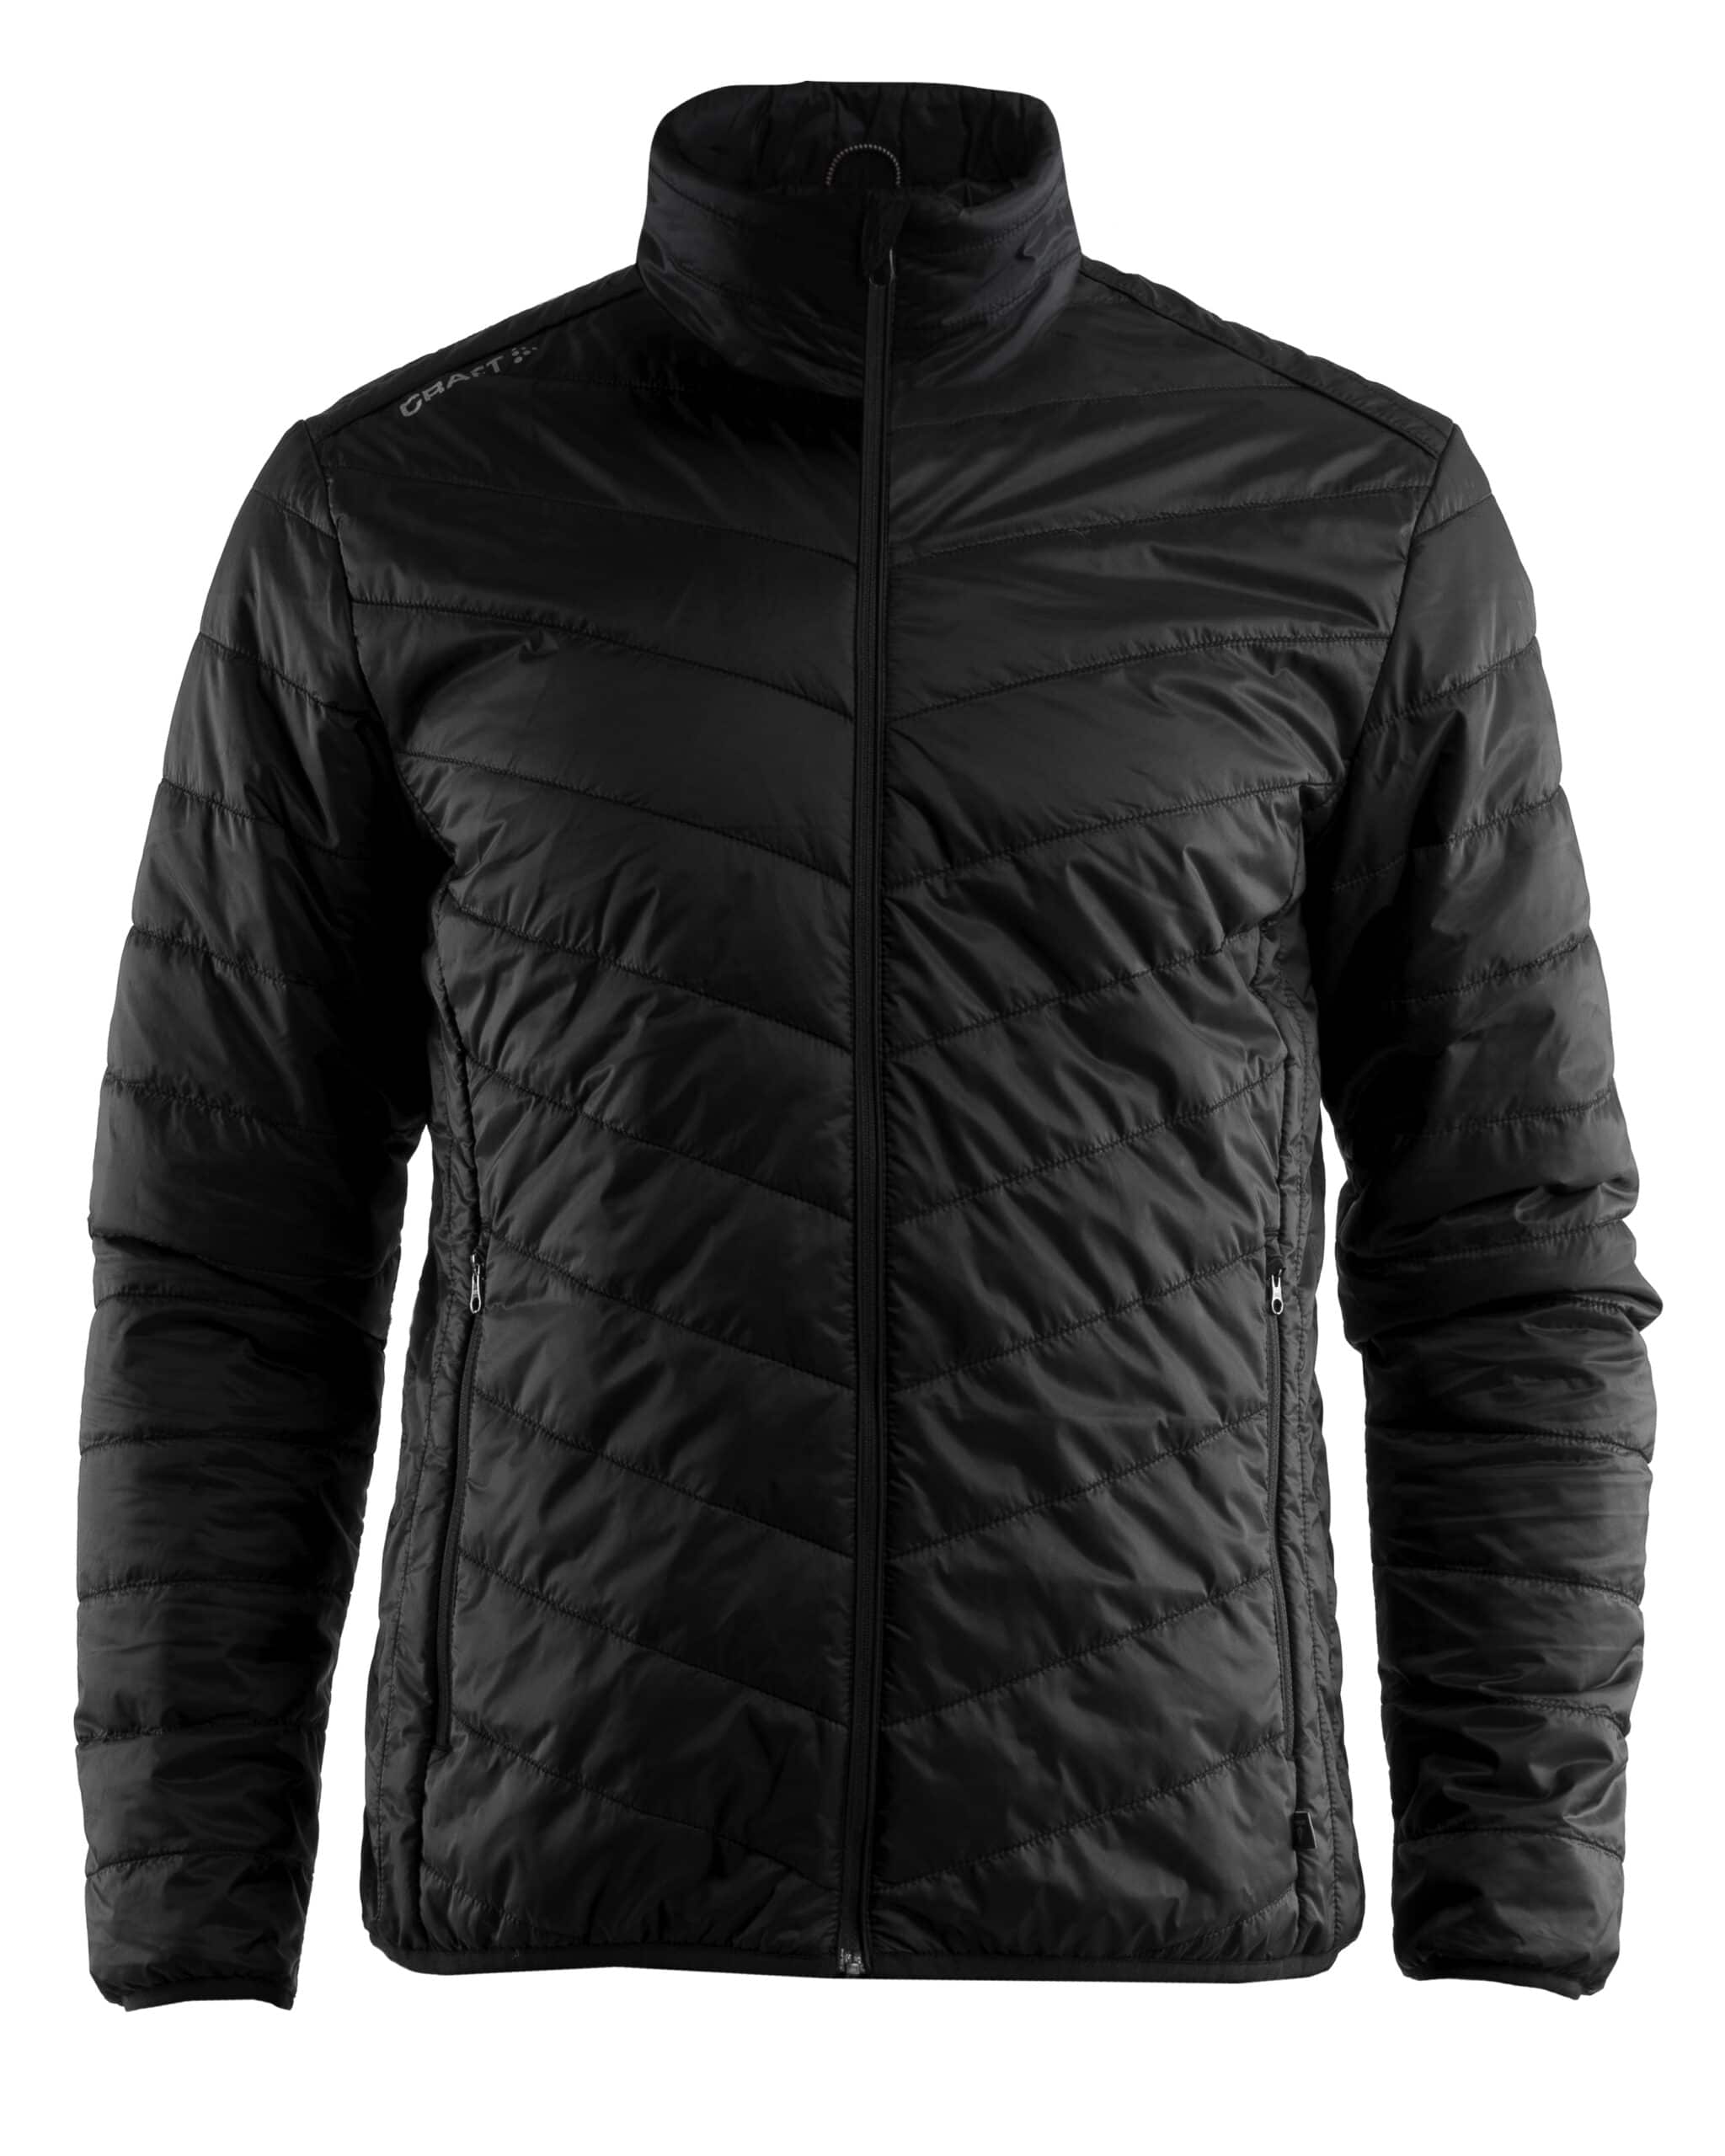 Craft - Light primaloft jacket Maend - Black S